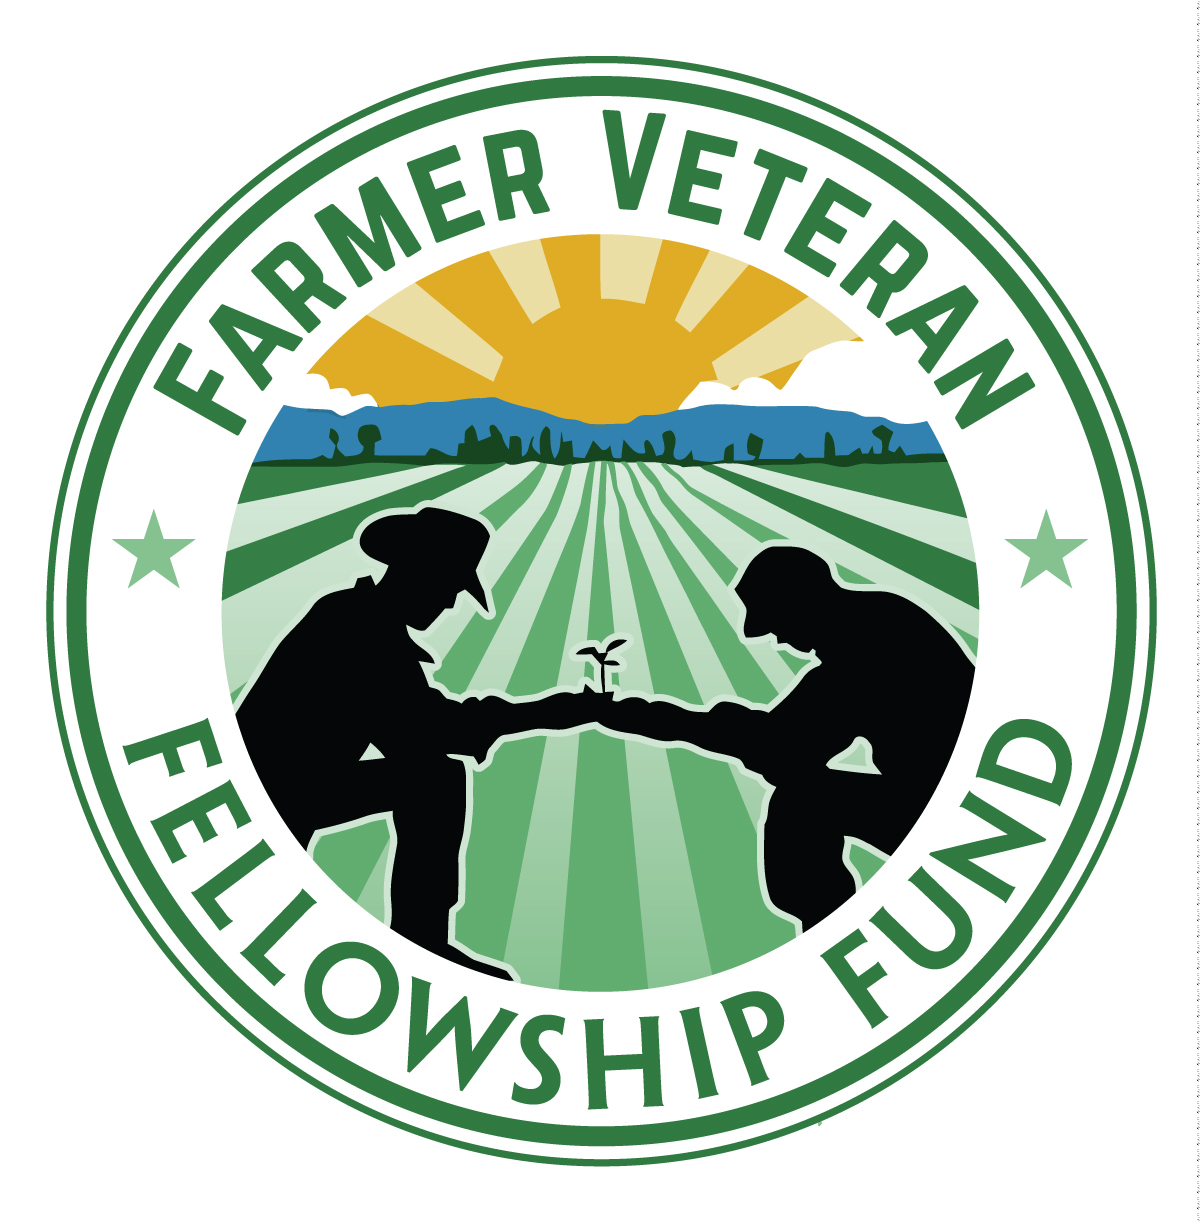 Farmer Veteran Fellowship Fund to Begin Accepting Applications February 1